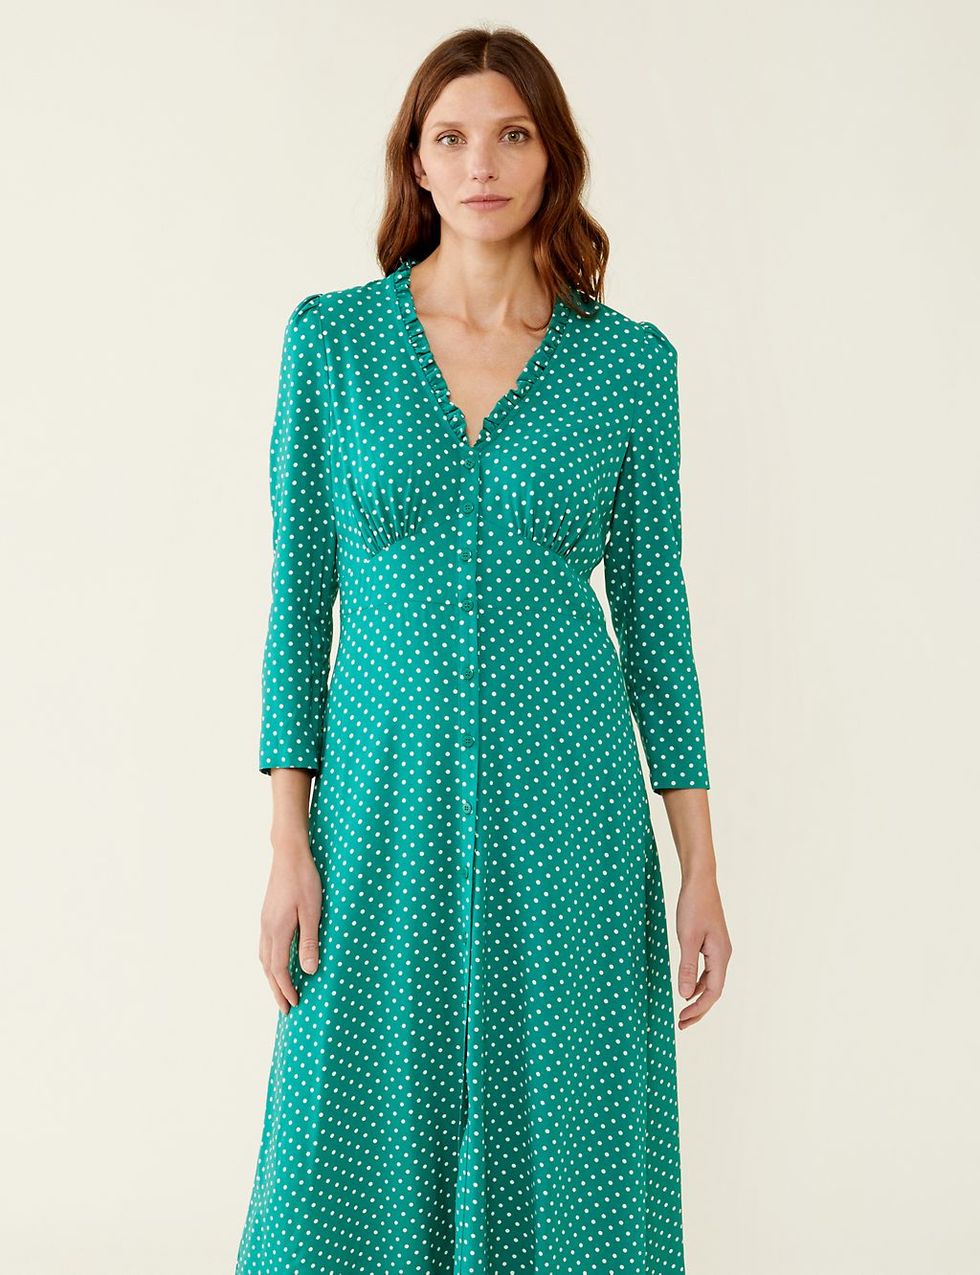 Susanna Reid's polka dot midi dress is the perfect spring look